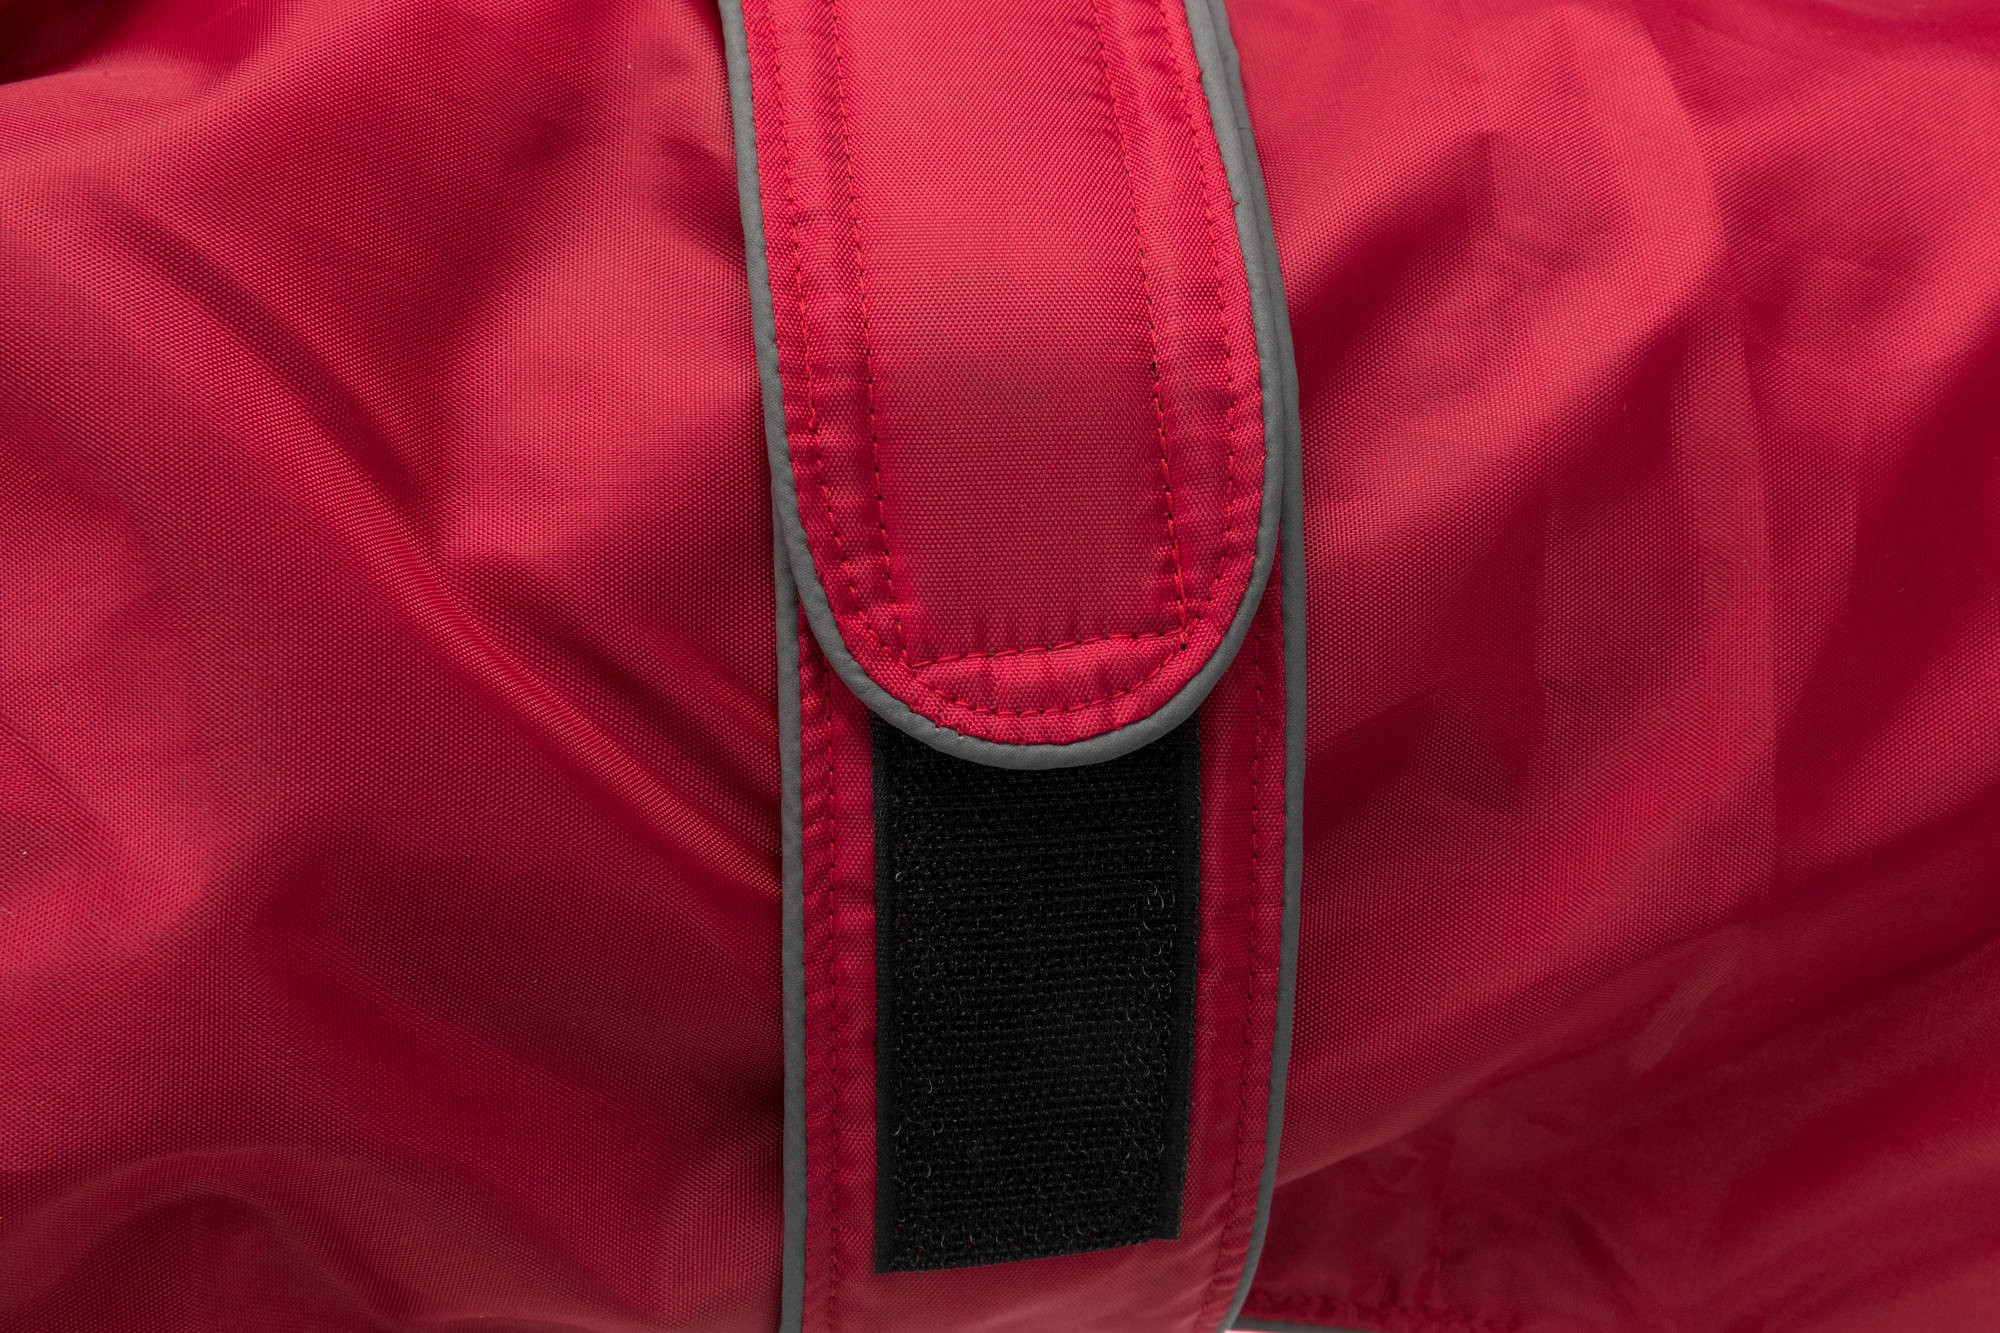 Capa impermeable para perros Orléans rojo - varias tallas disponibles